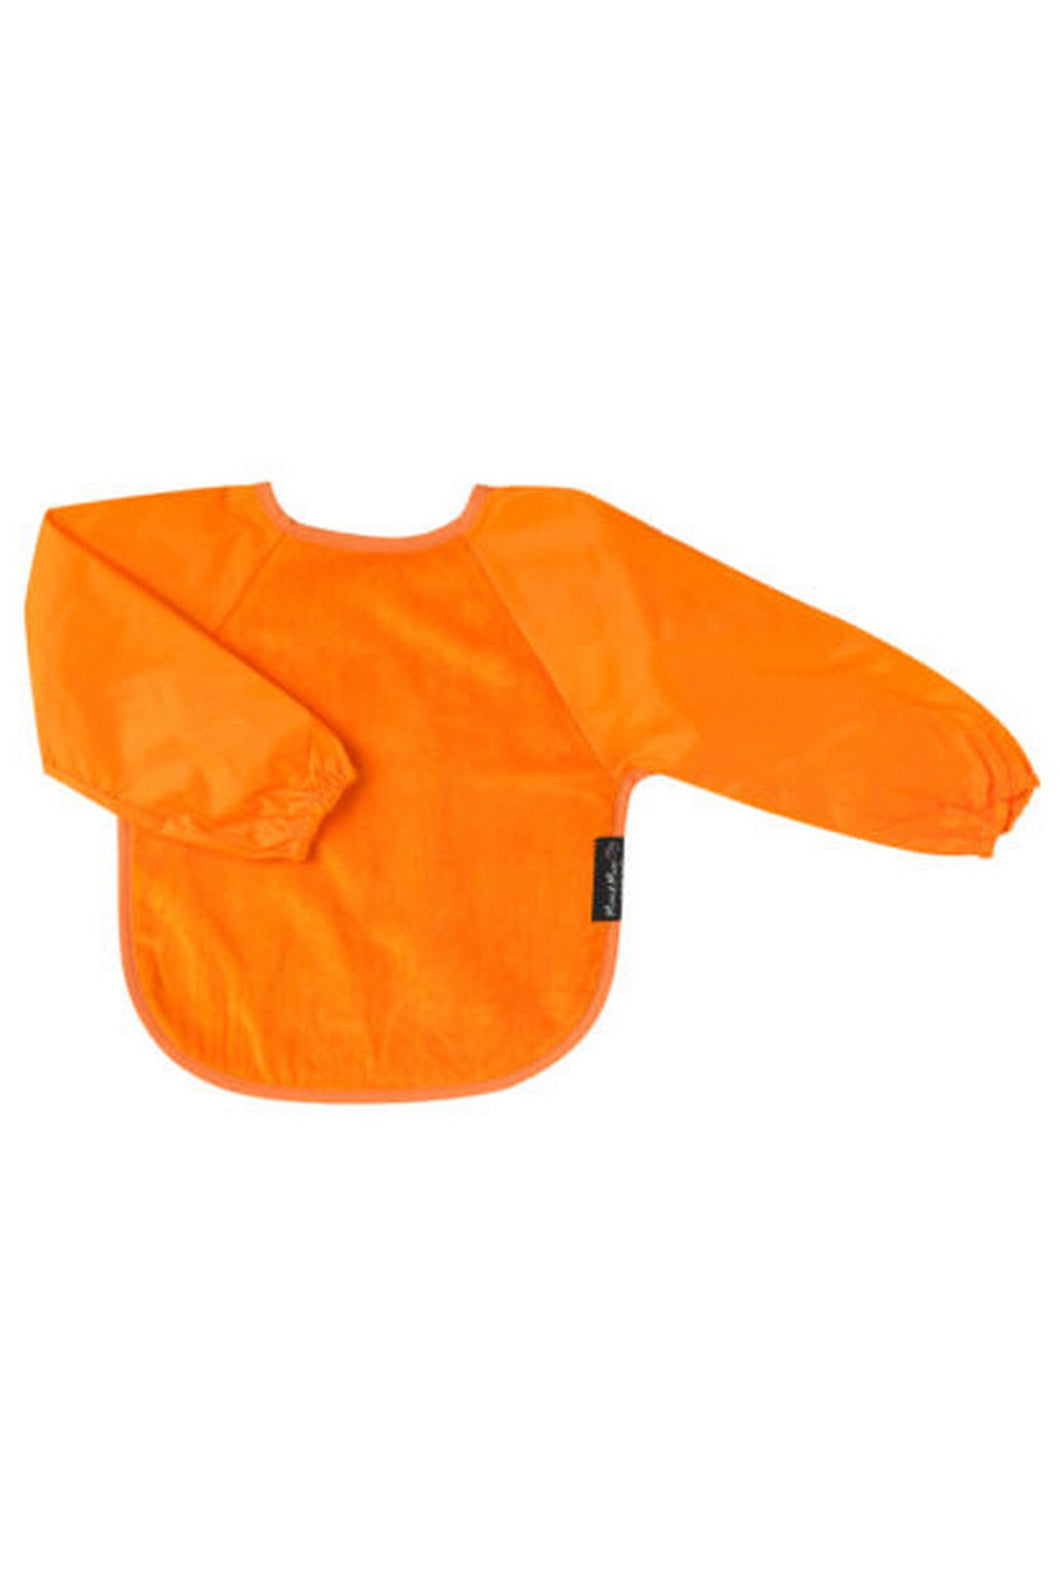 Mum2Mum Sleeved Bib Large Orange 1